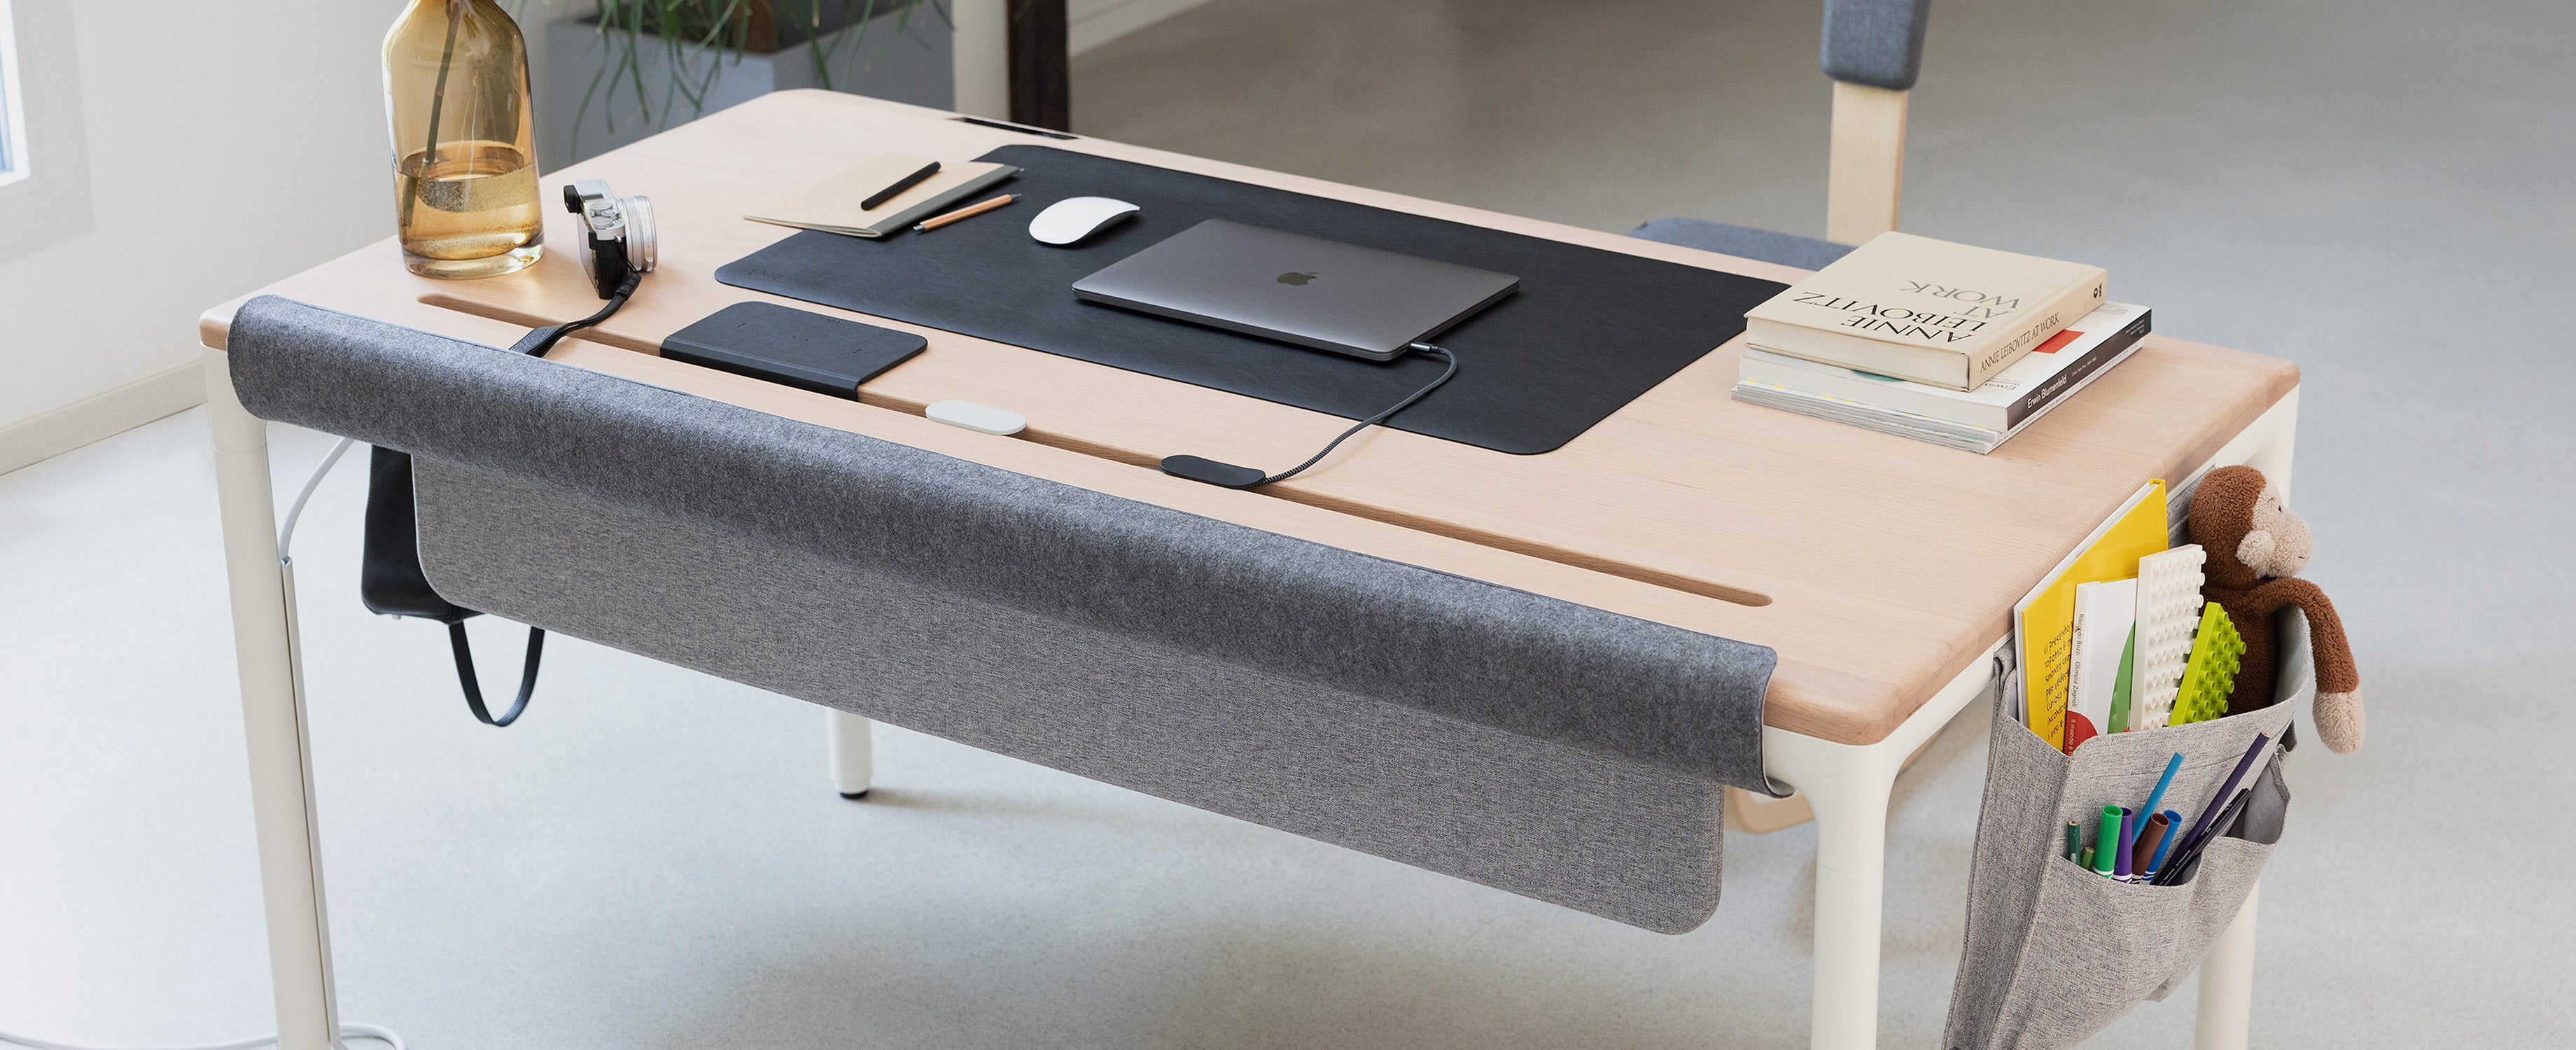 Tenon desk with flow kit accessories